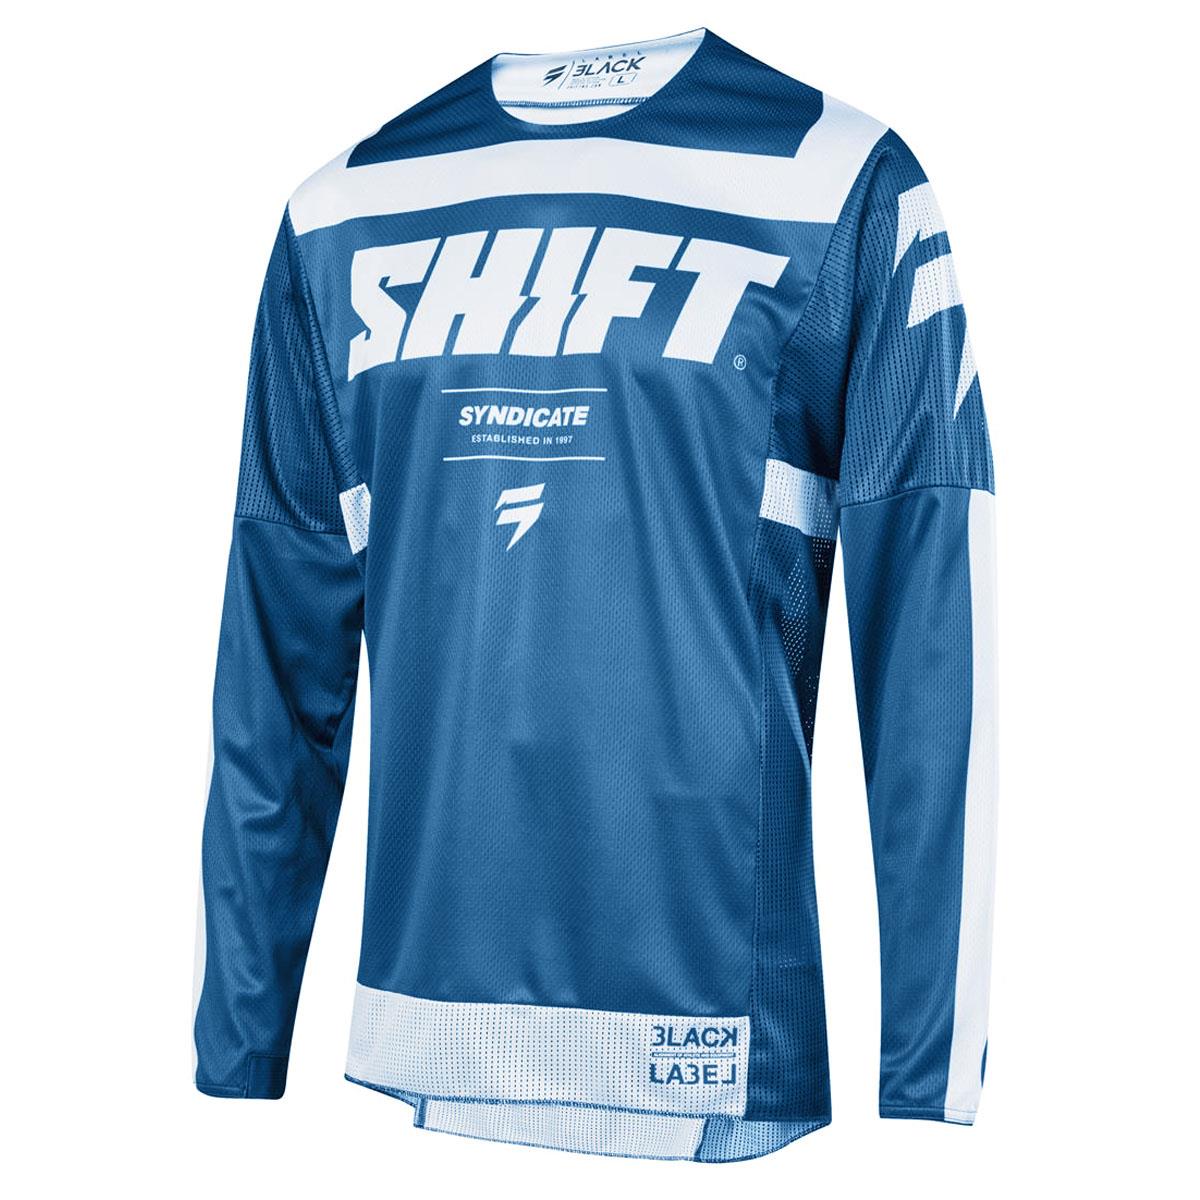 Shift Jersey 3lack Label Strike Blau